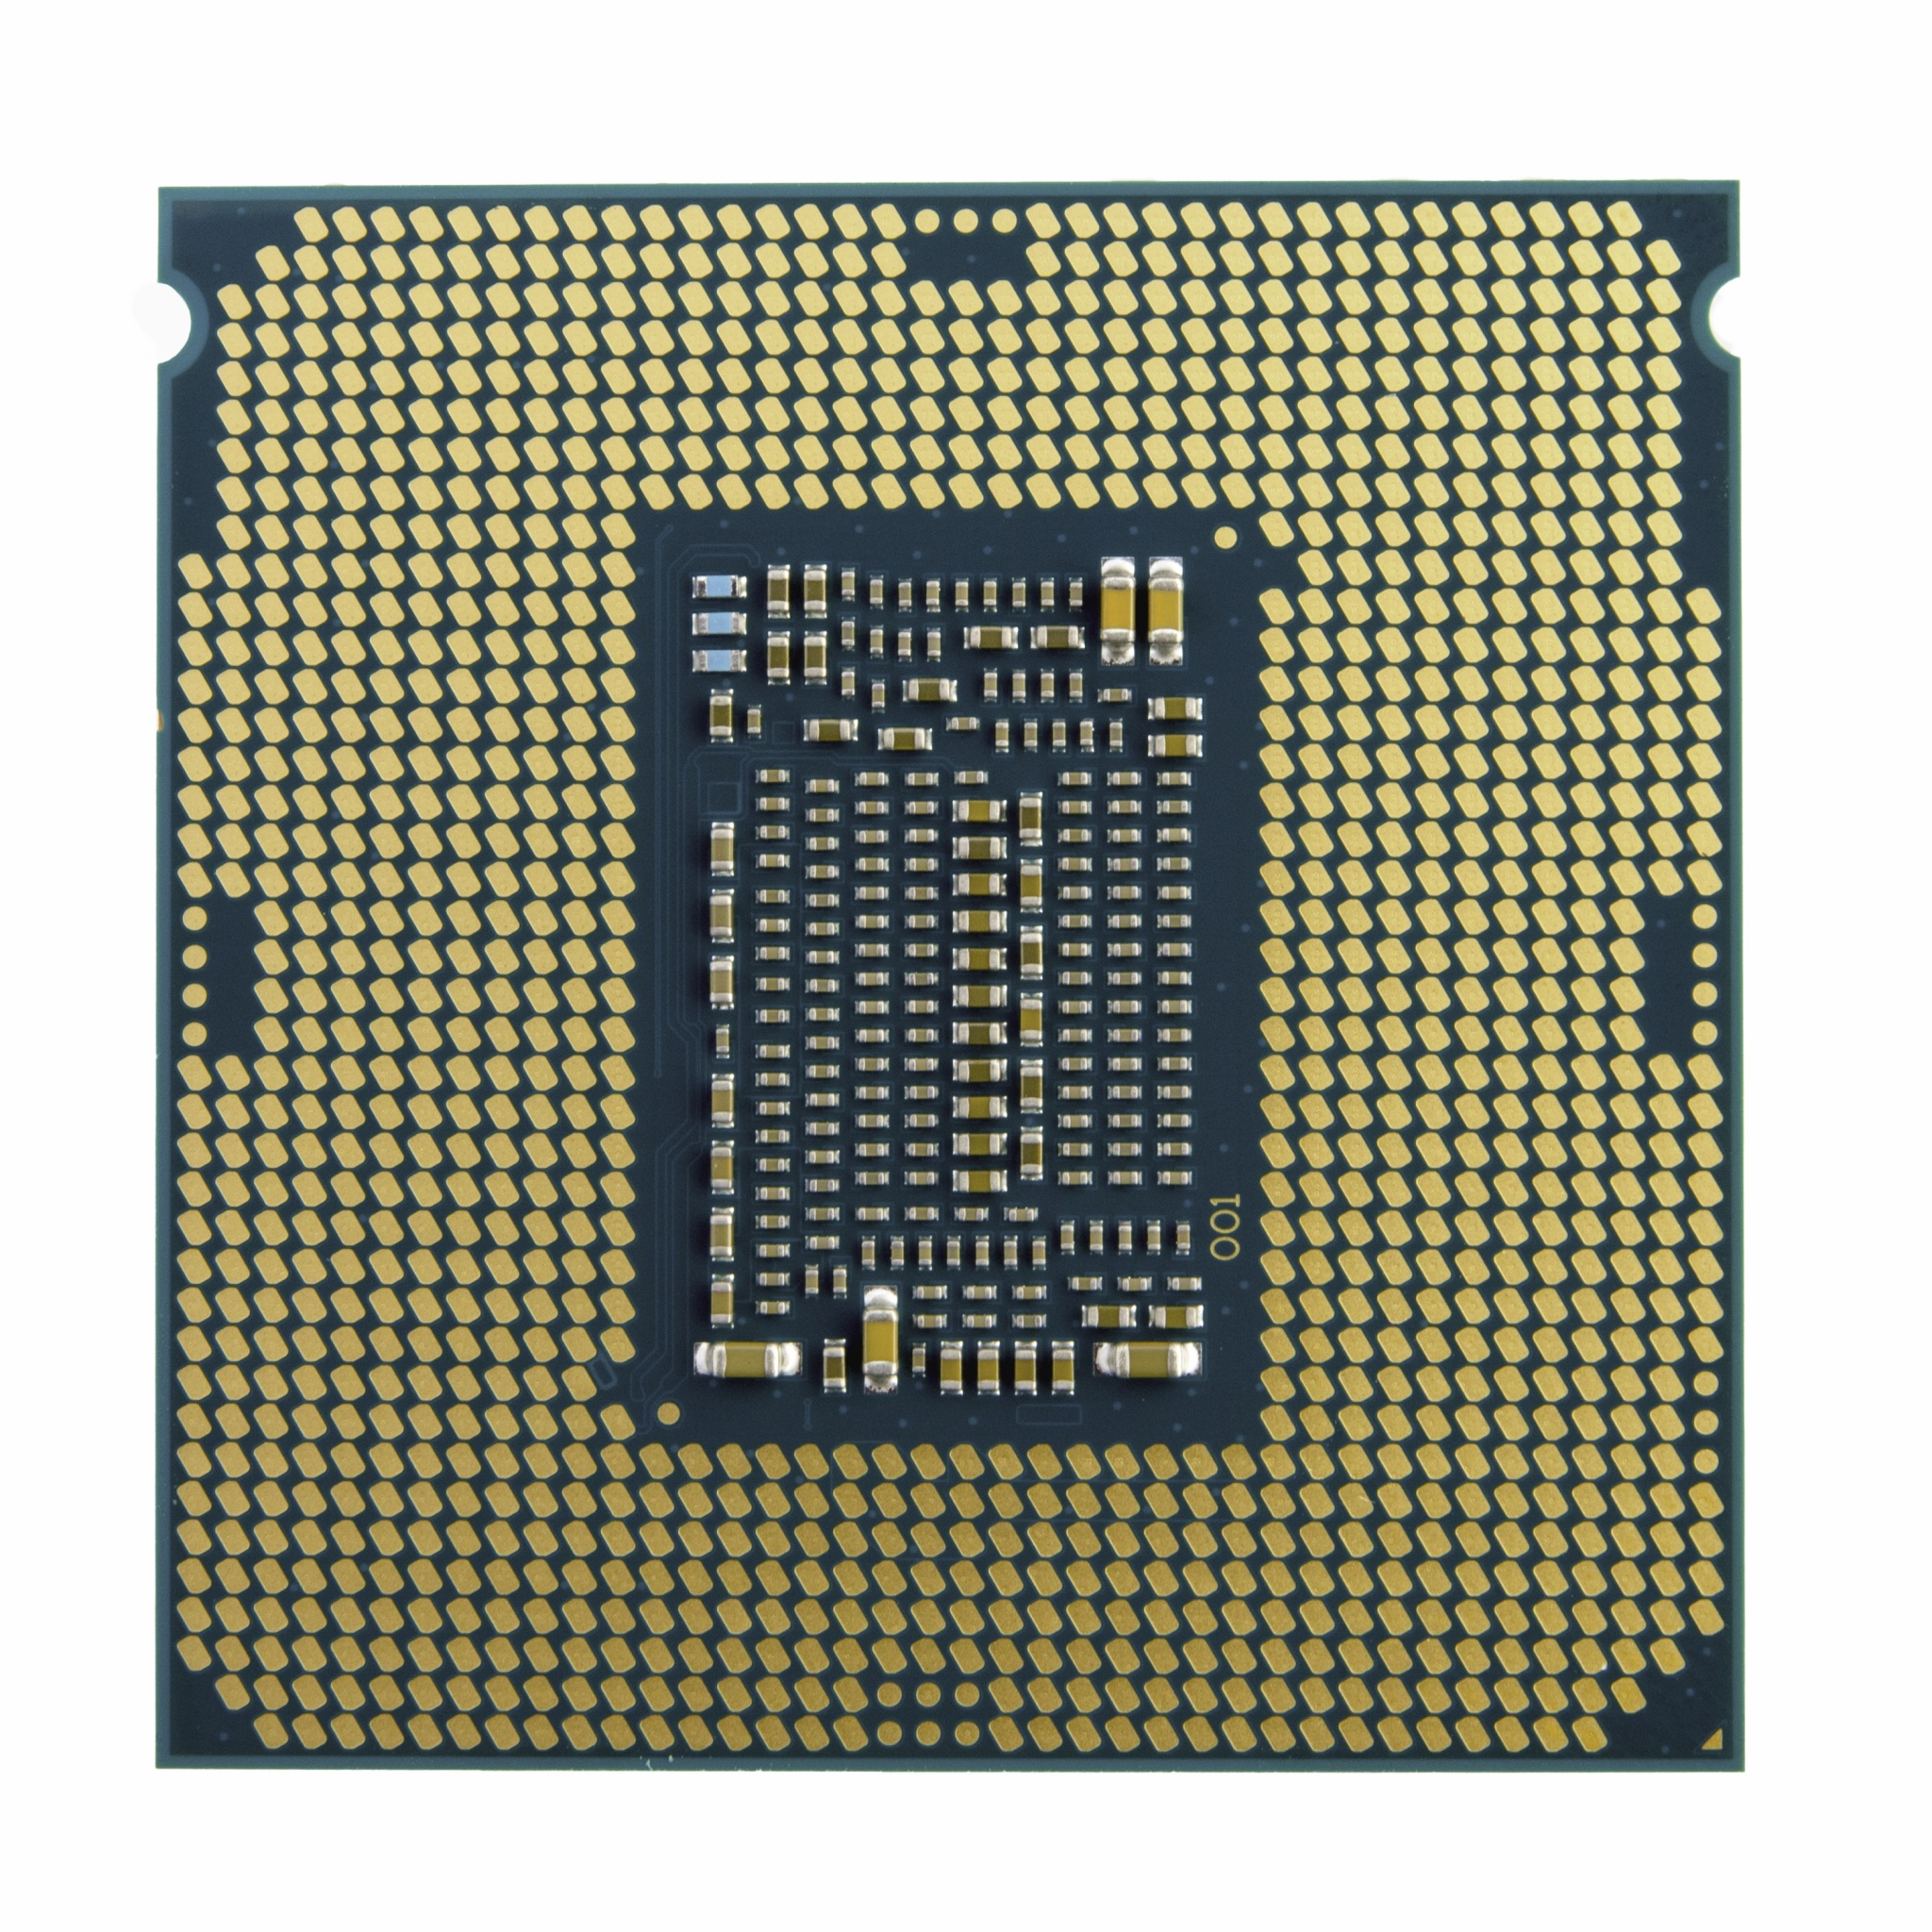 INTEL Core i5-10400F 2.9GHz LGA1200 Box - Arvutitark